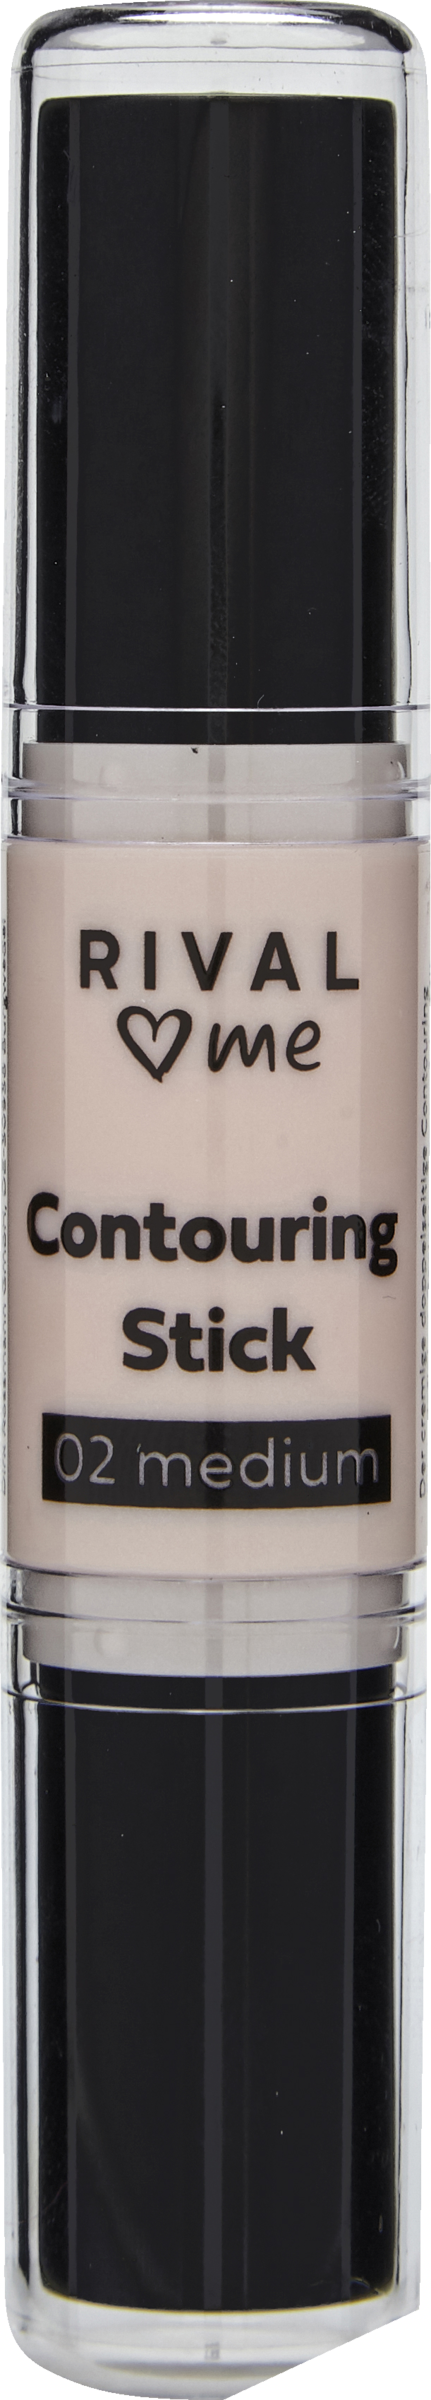 RIVAL loves me Contouring Stick 02 medium